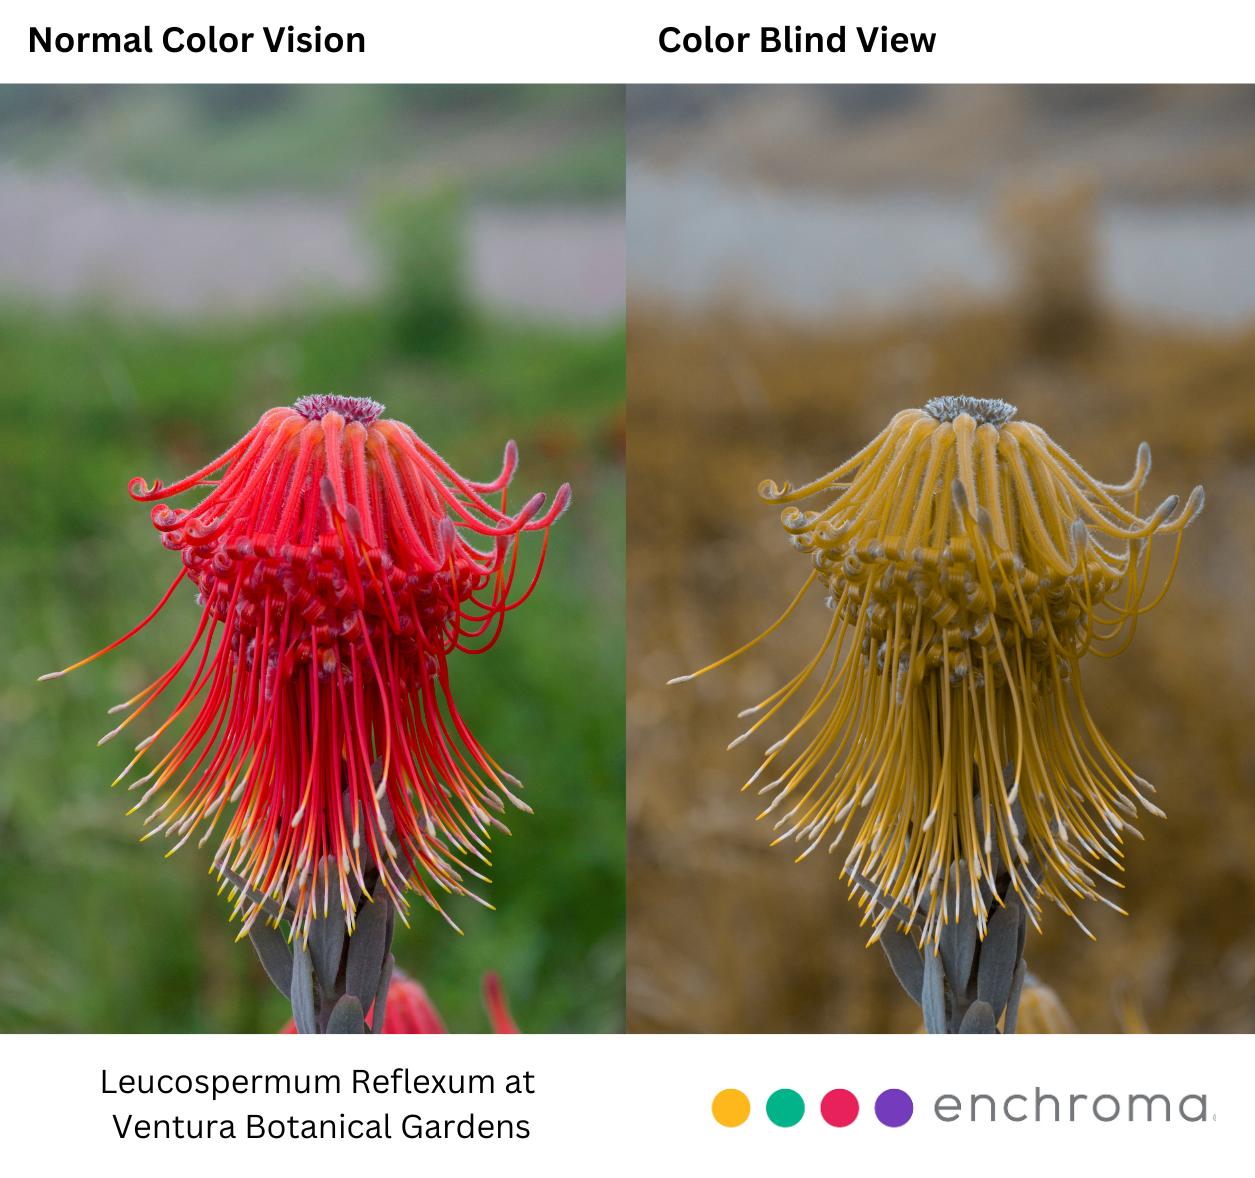 Leucospermum reflexum at Ventura Botanical Gardens as seen by the color blind.